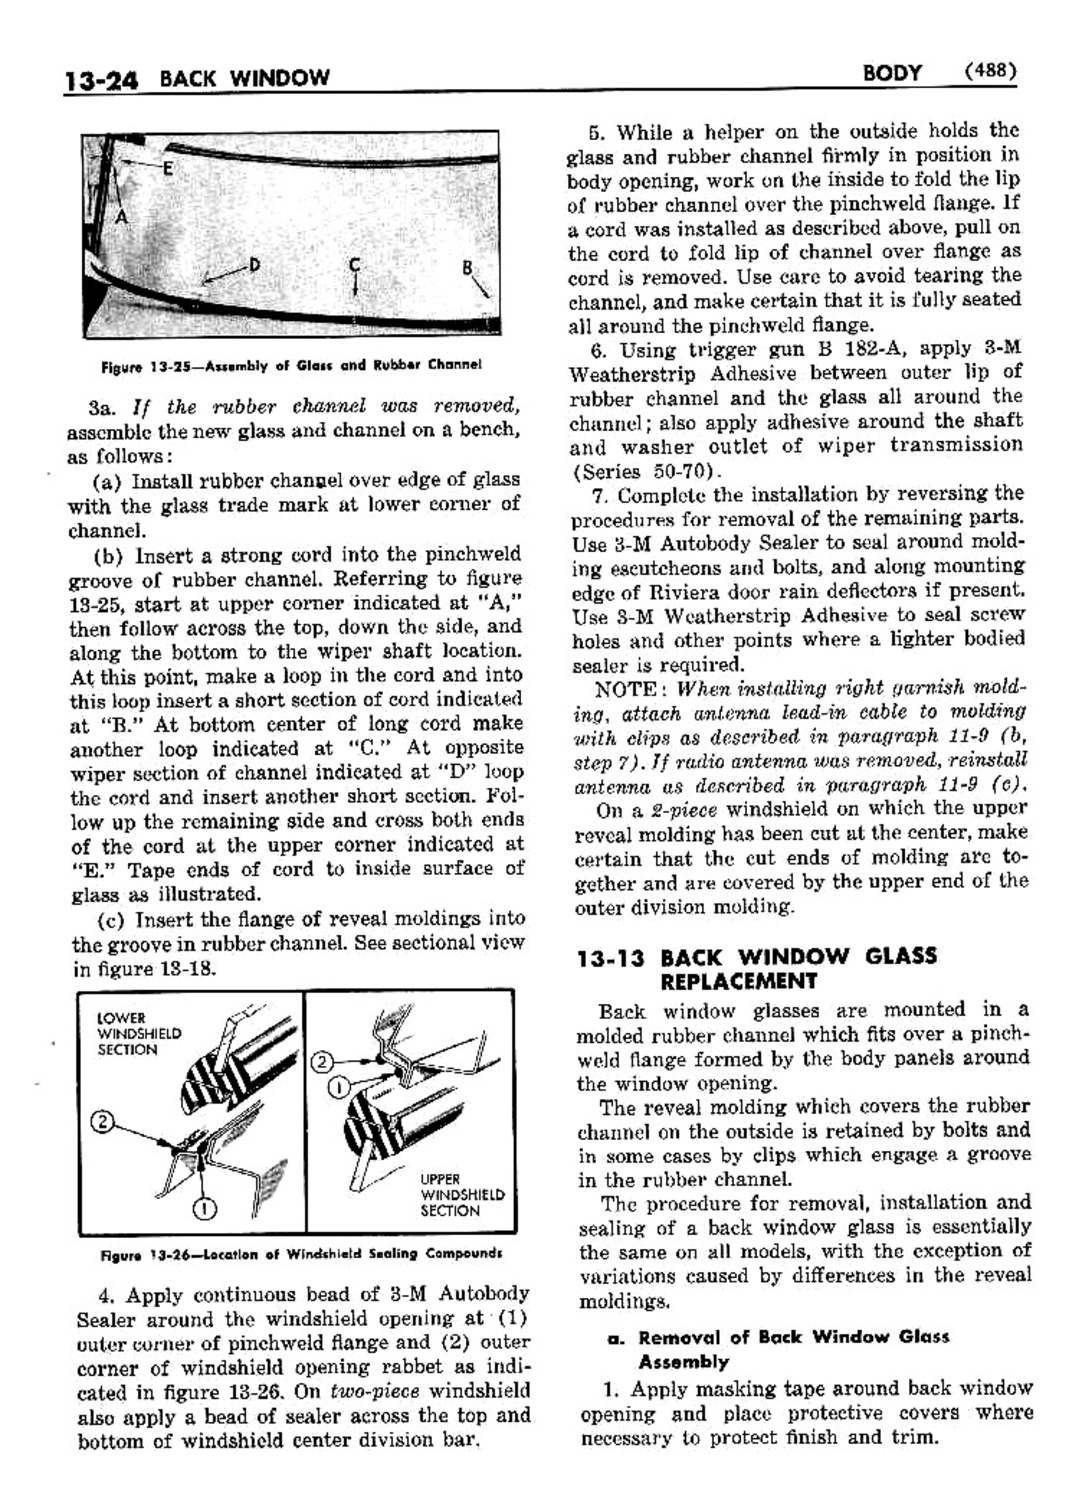 n_14 1952 Buick Shop Manual - Body-024-024.jpg